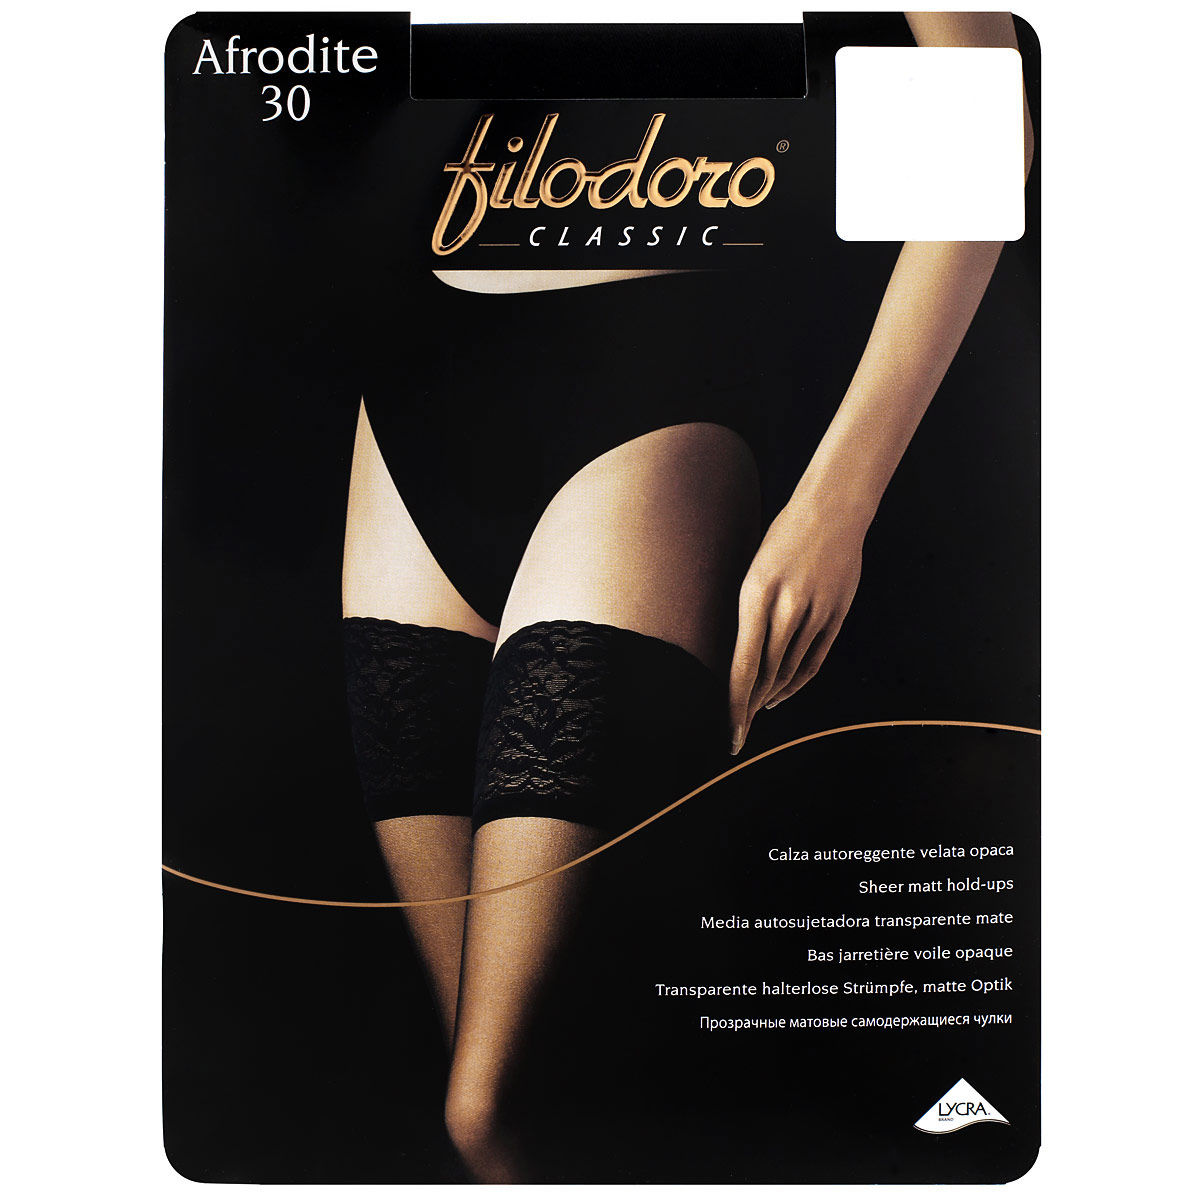 Чулки Filodoro Classic Afrodite 30, цвет: Nero (черный). SSP-002199. Размер 2 (S)